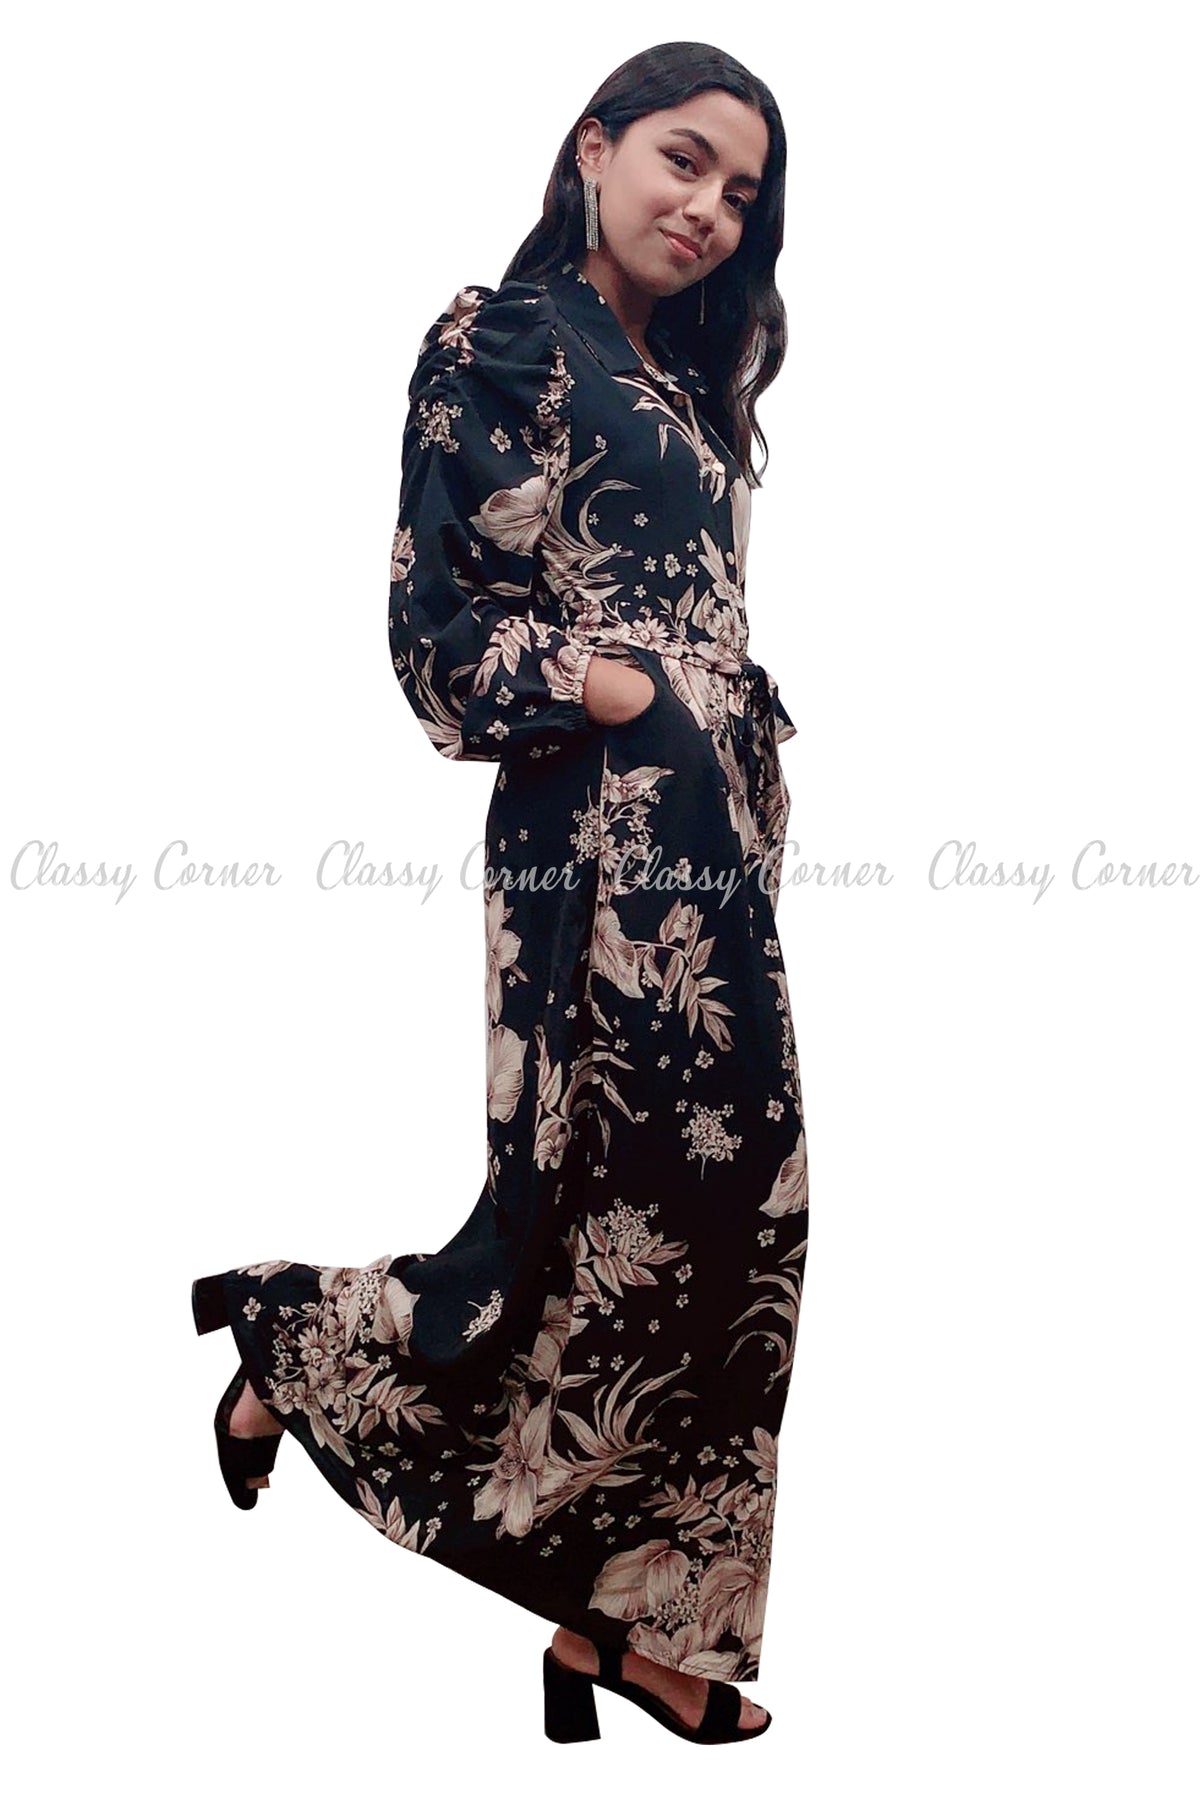 Floral Print Neutral Colour and Black Modest Long Dress - Classy Corner